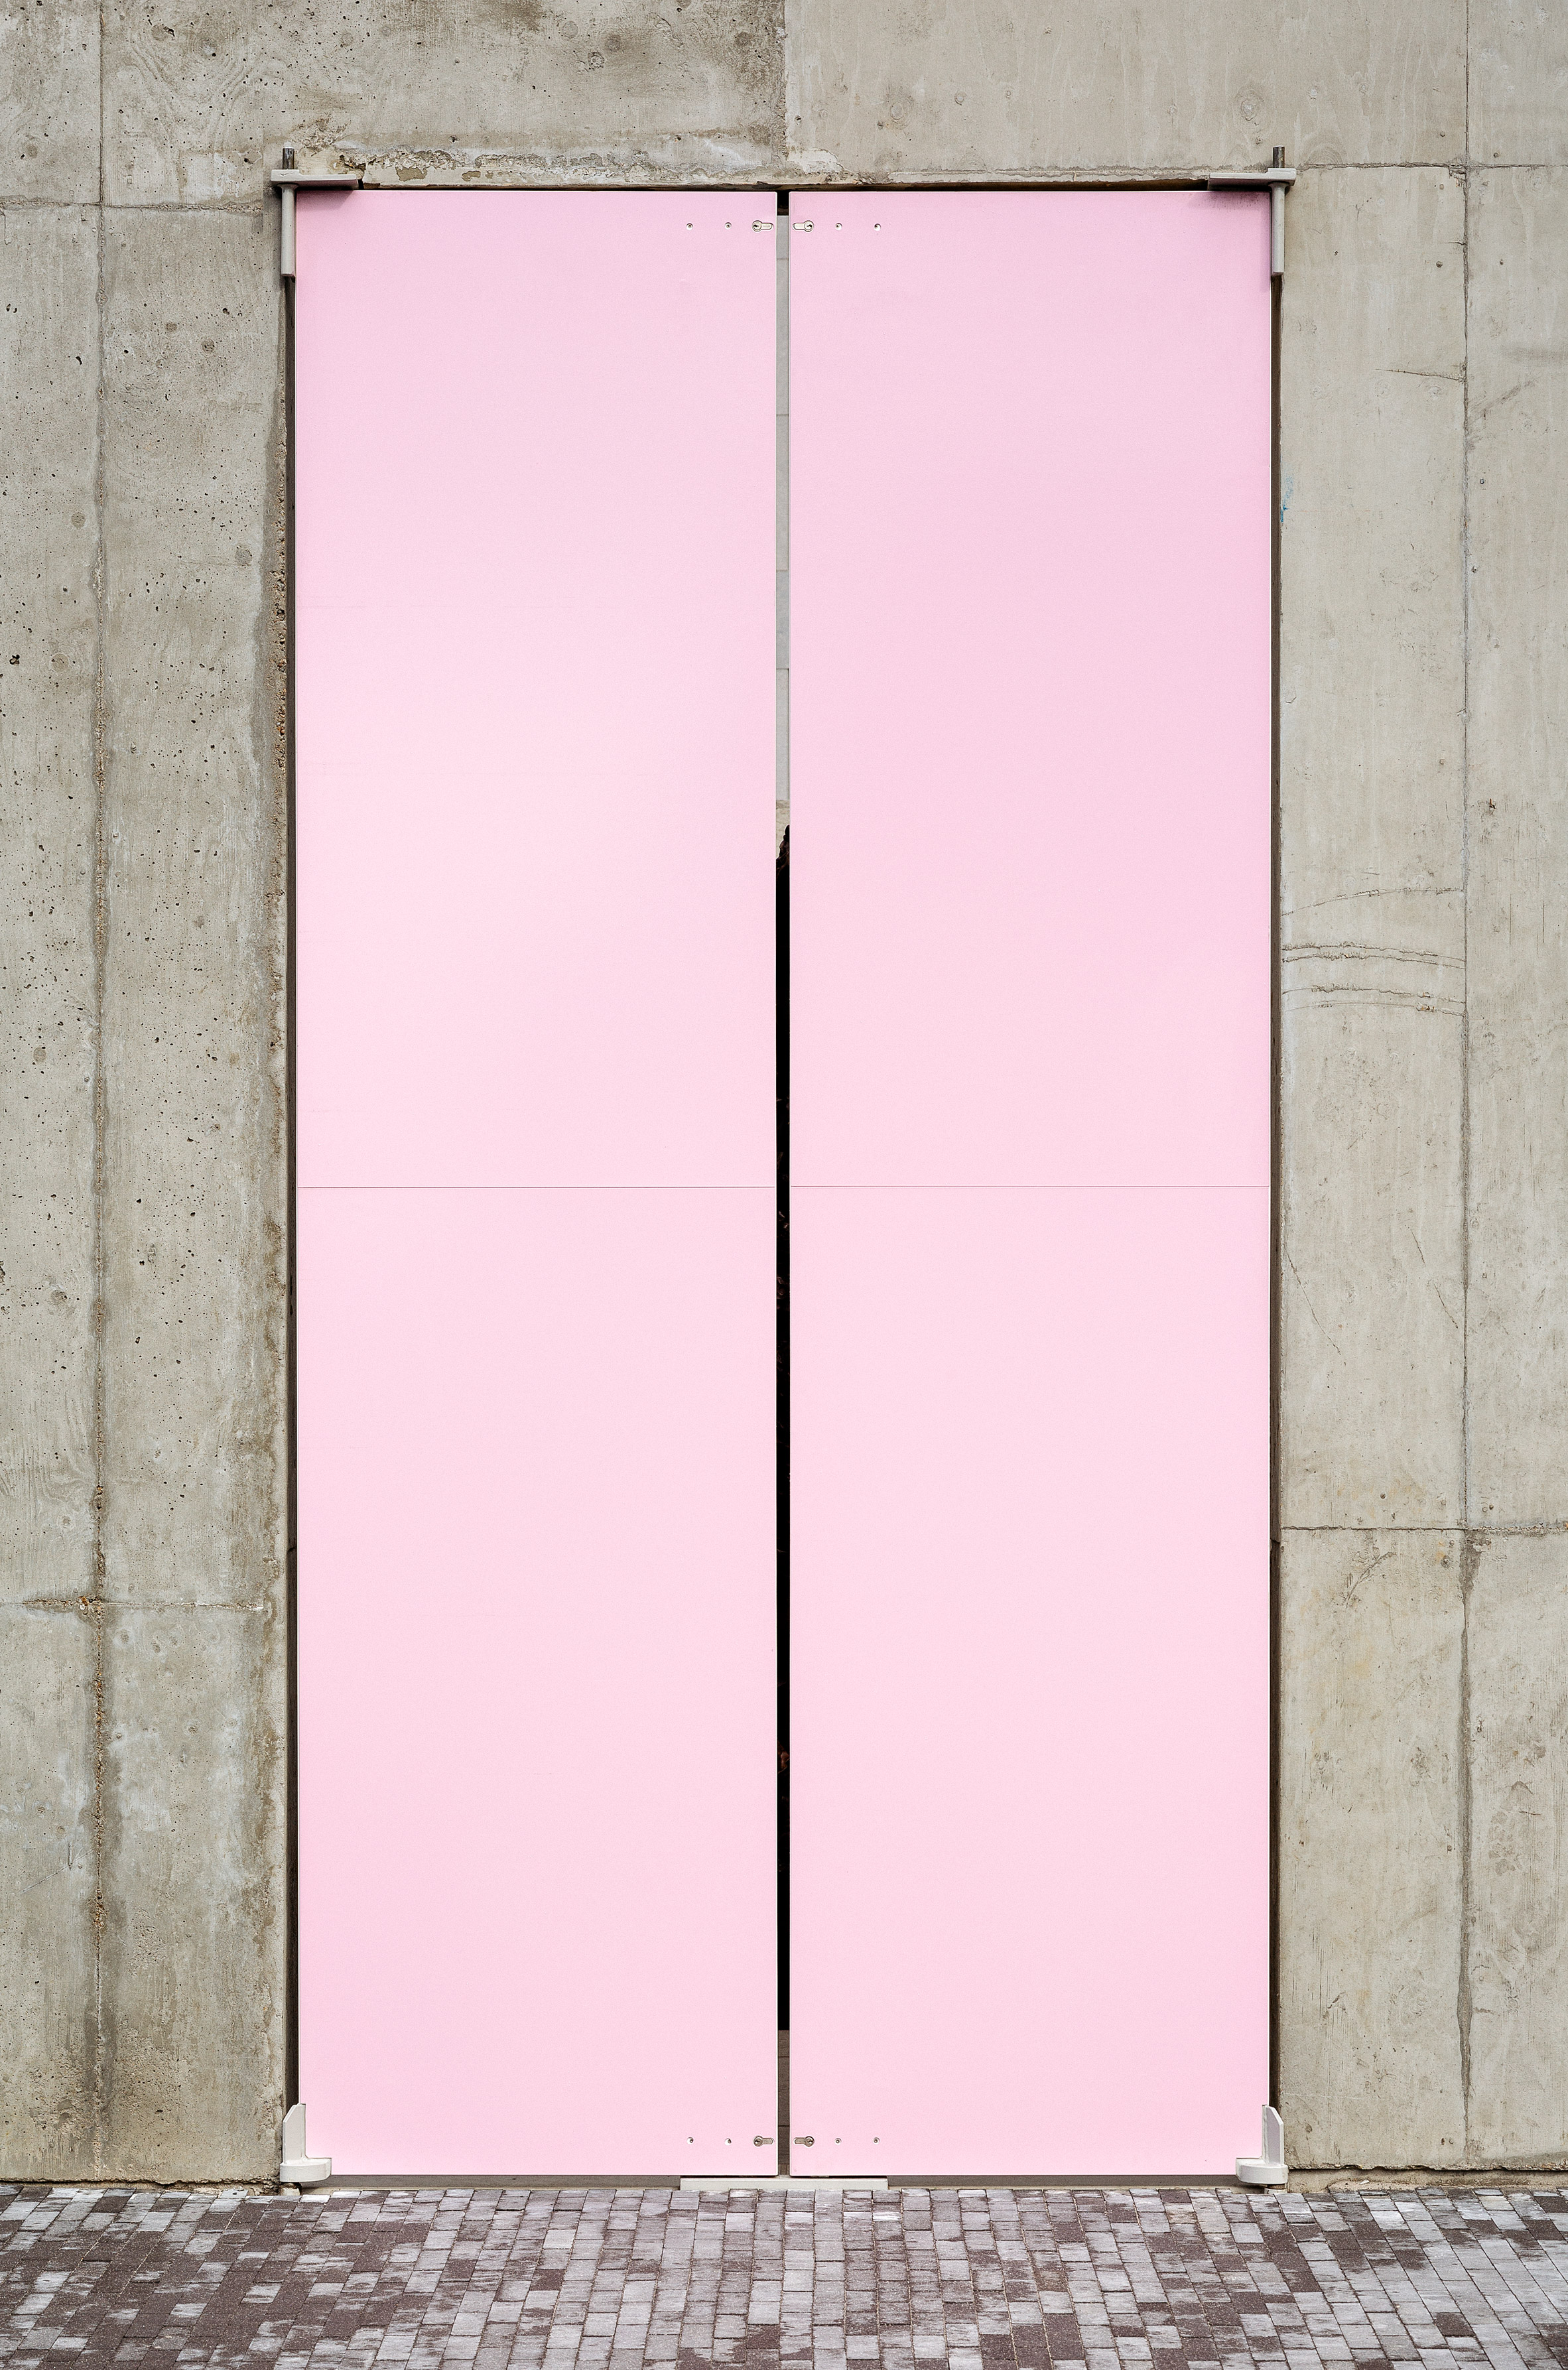 Five concrete boxes with doors form Antwerp's Laere Gallery